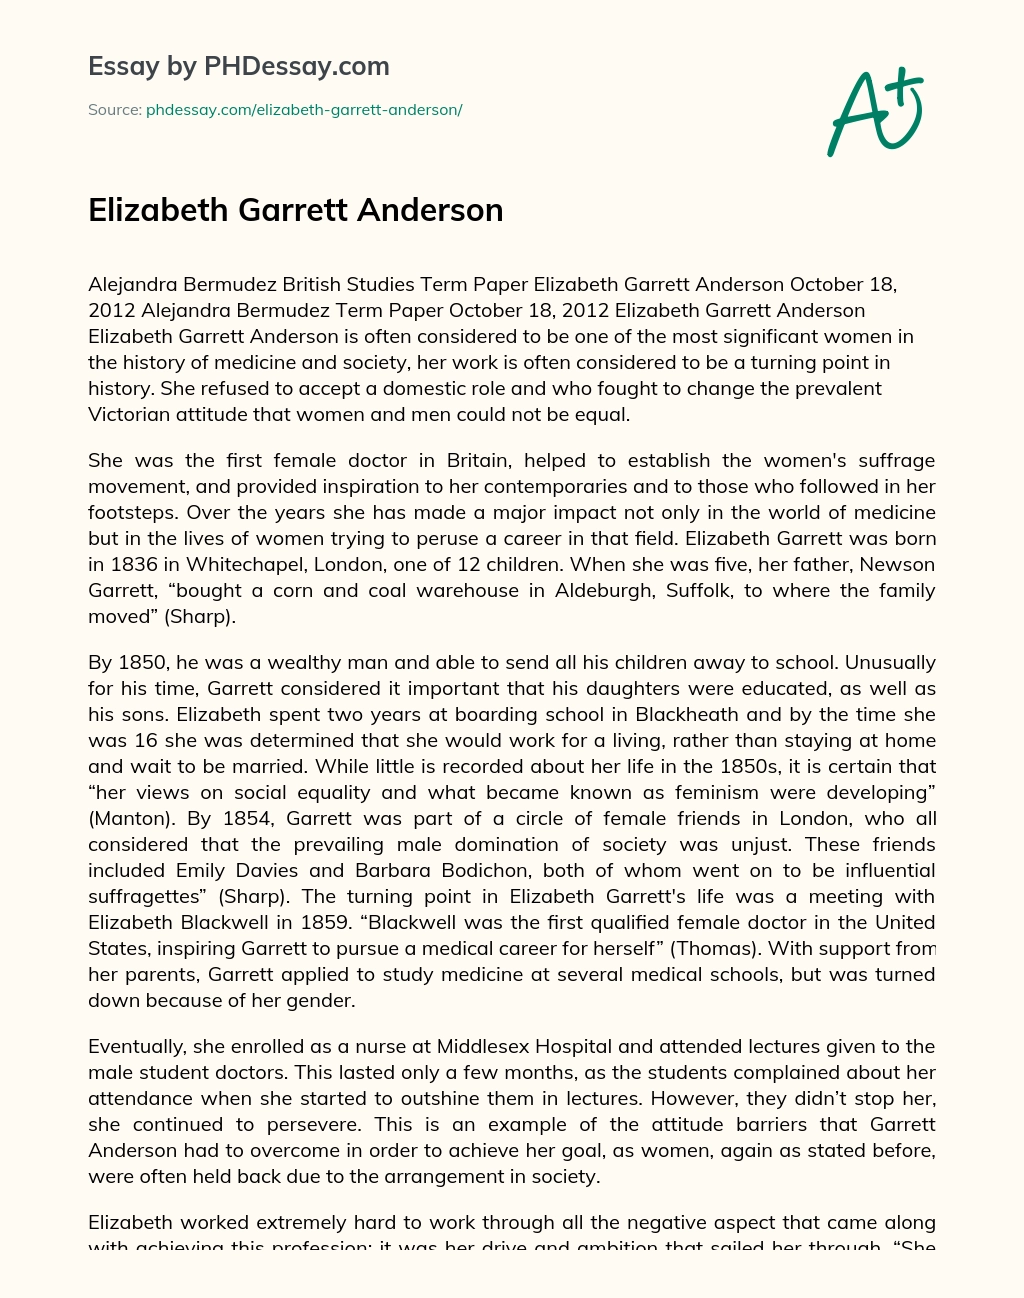 Elizabeth Garrett Anderson essay